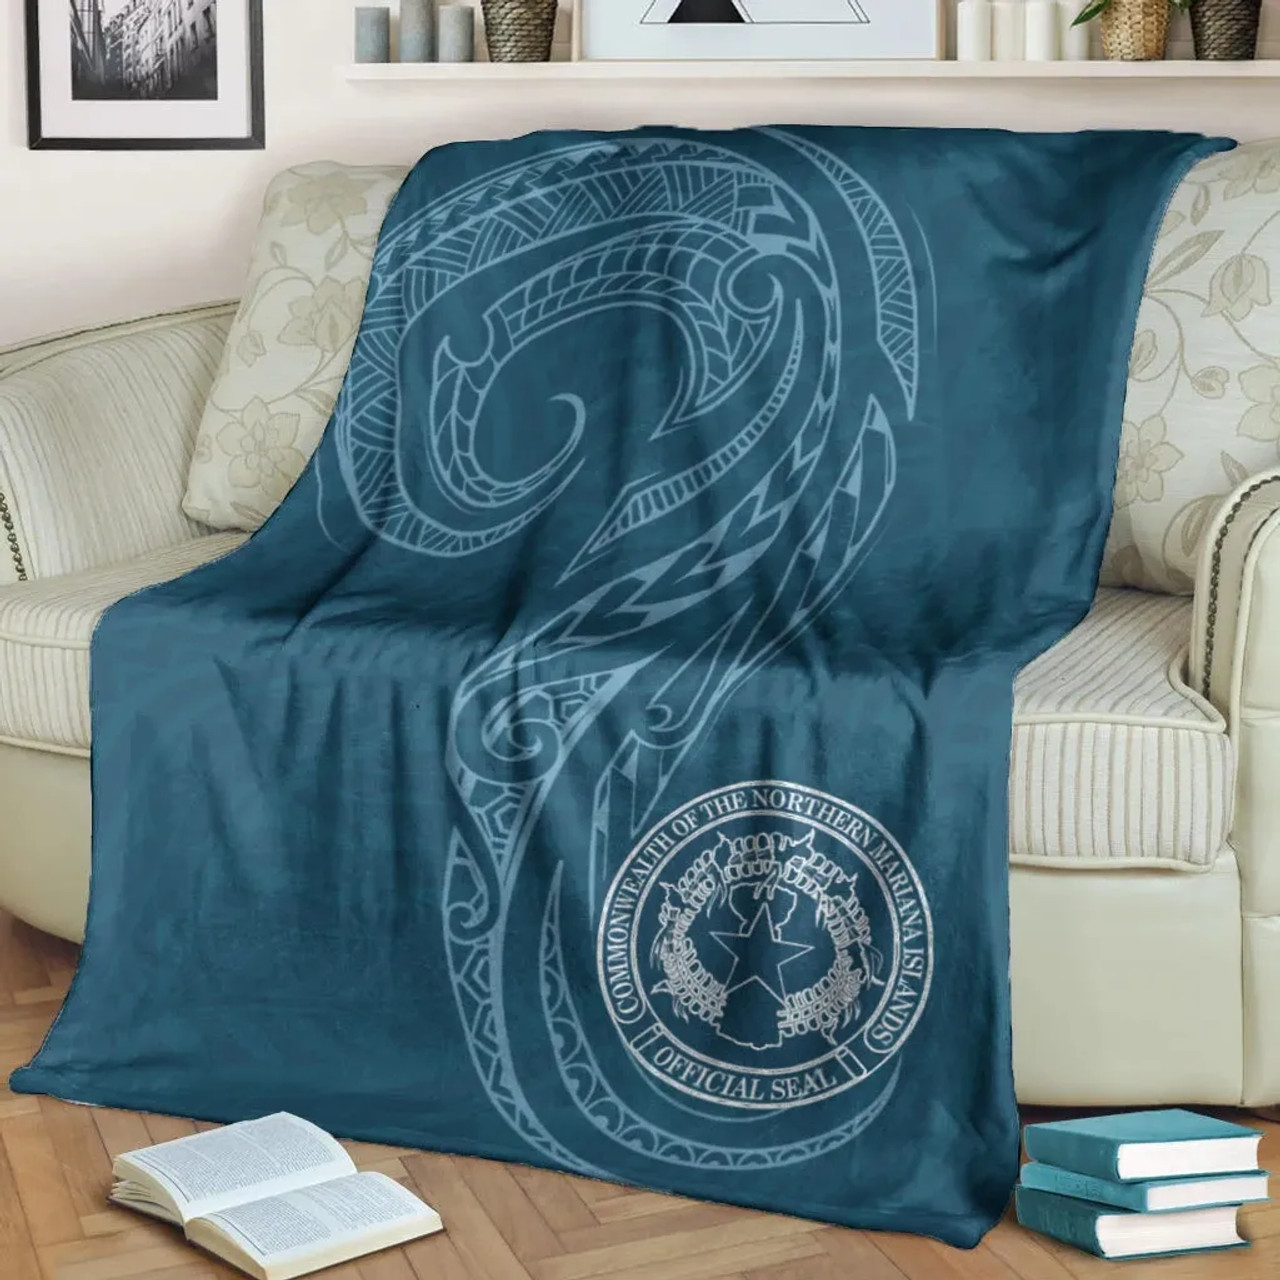 Northern Mariana Islands Premium Blanket -  Polynesian Style 2